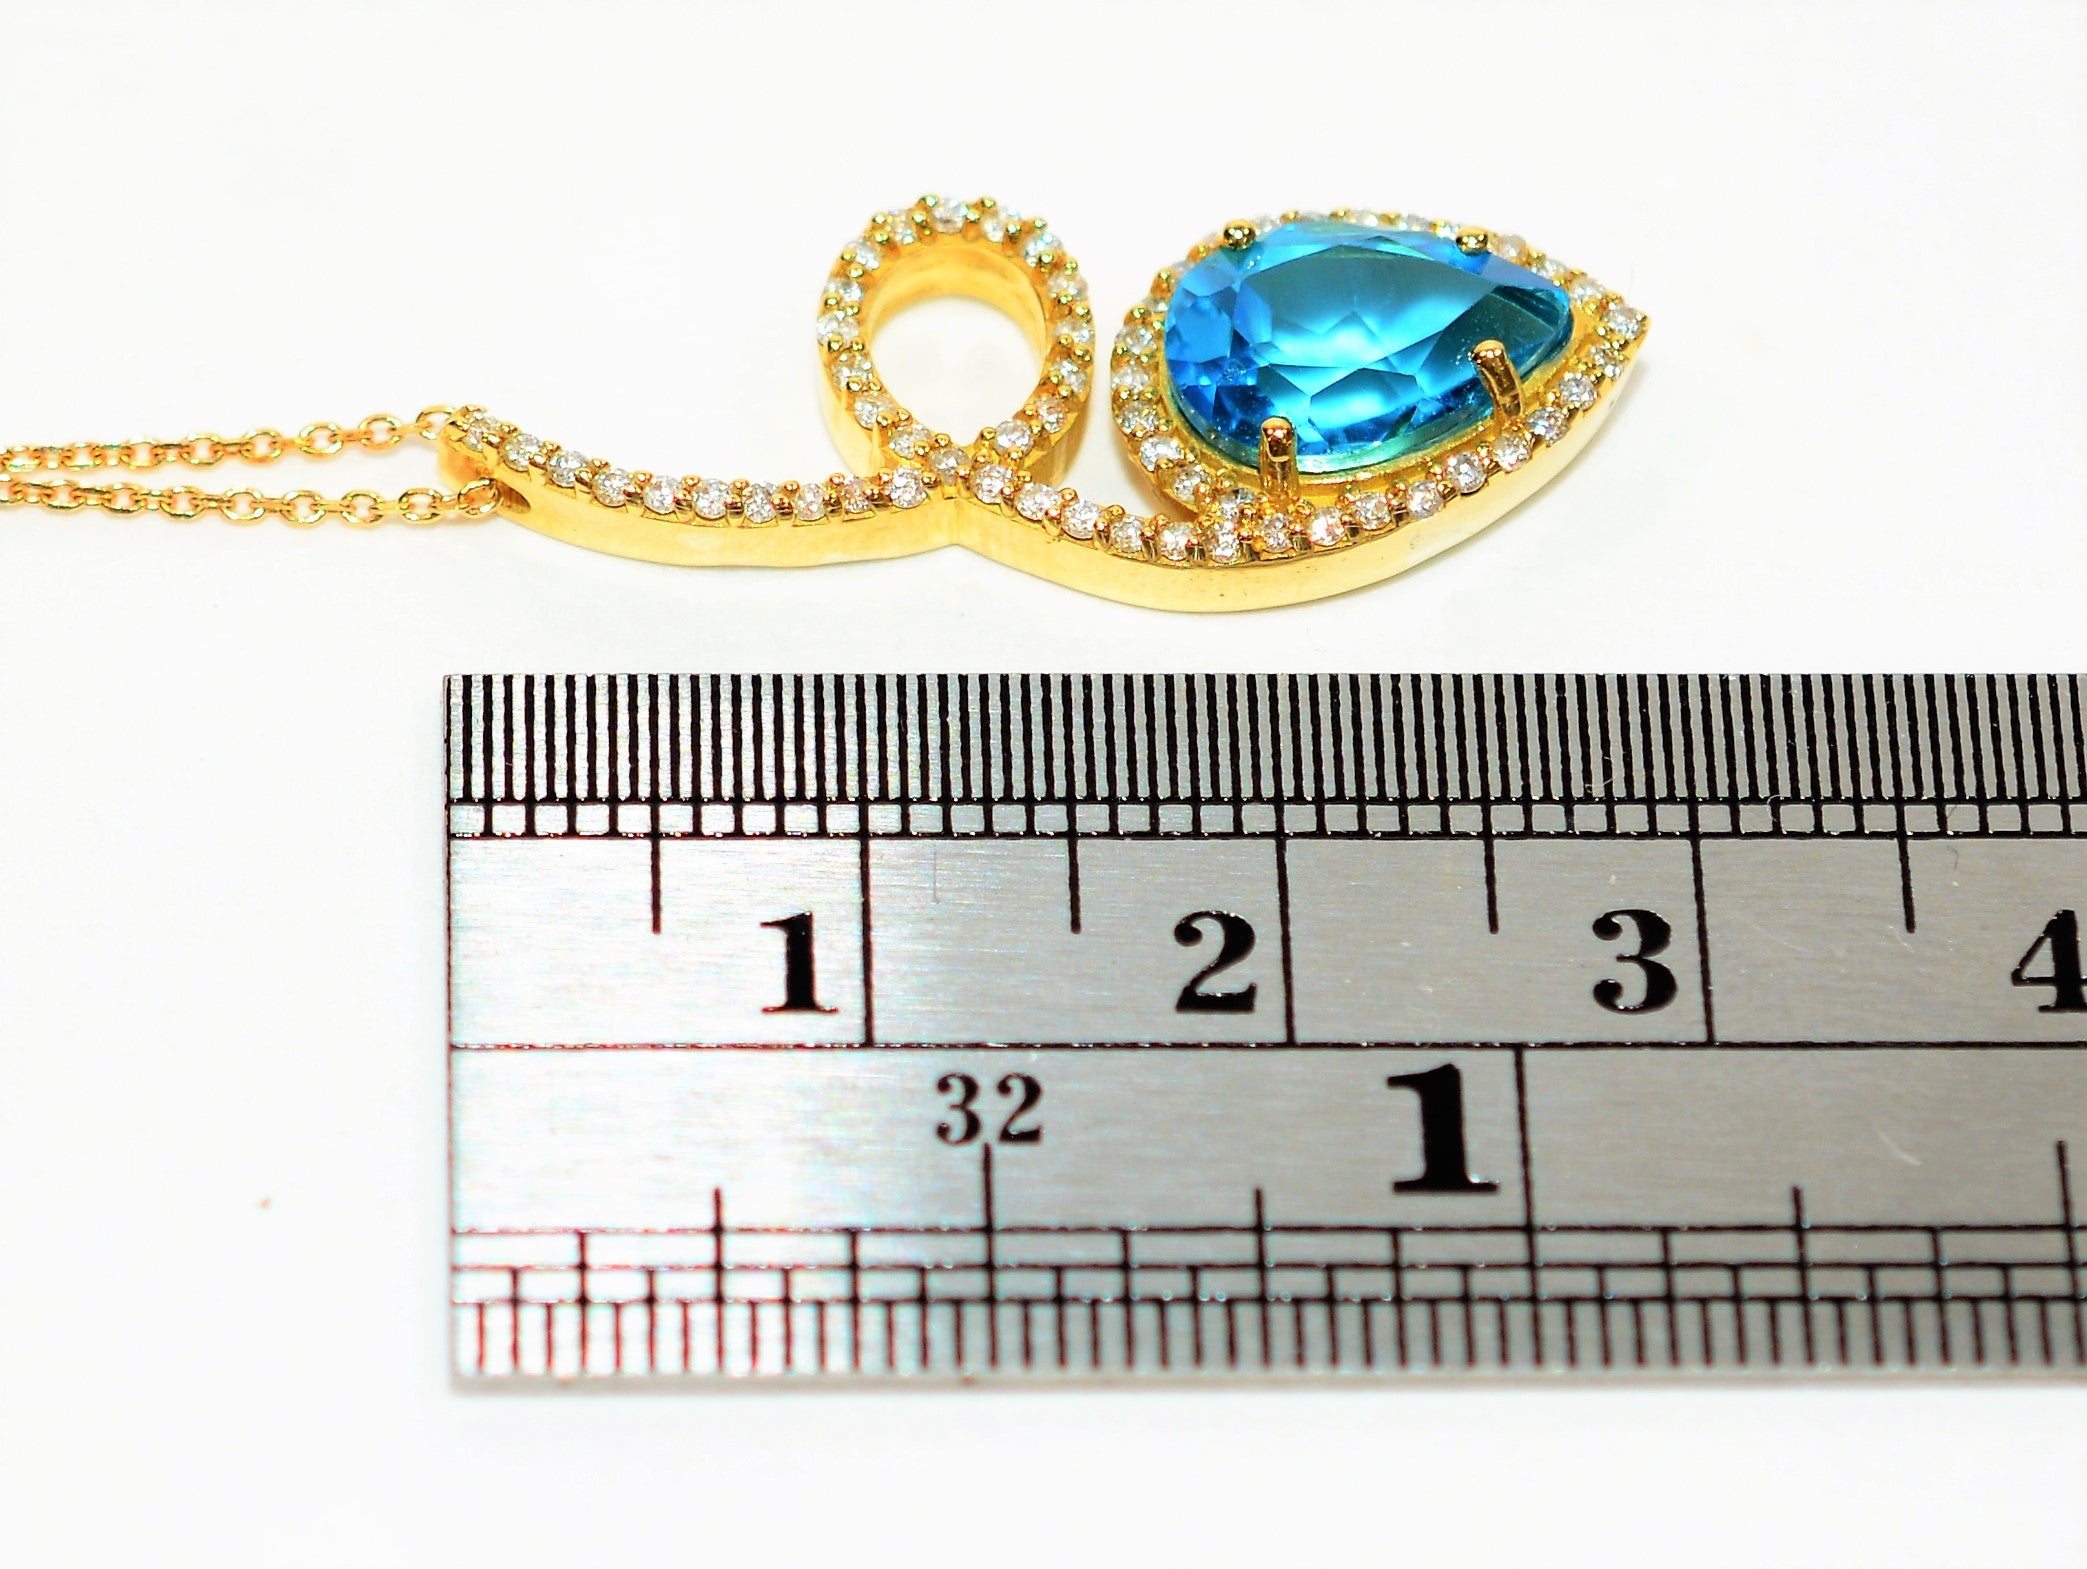 Natural Swiss Blue Topaz & Diamond Necklace 18K Solid Gold 2.55tcw Pendant Necklace Topaz Necklace Birthstone Necklace Statement Necklace